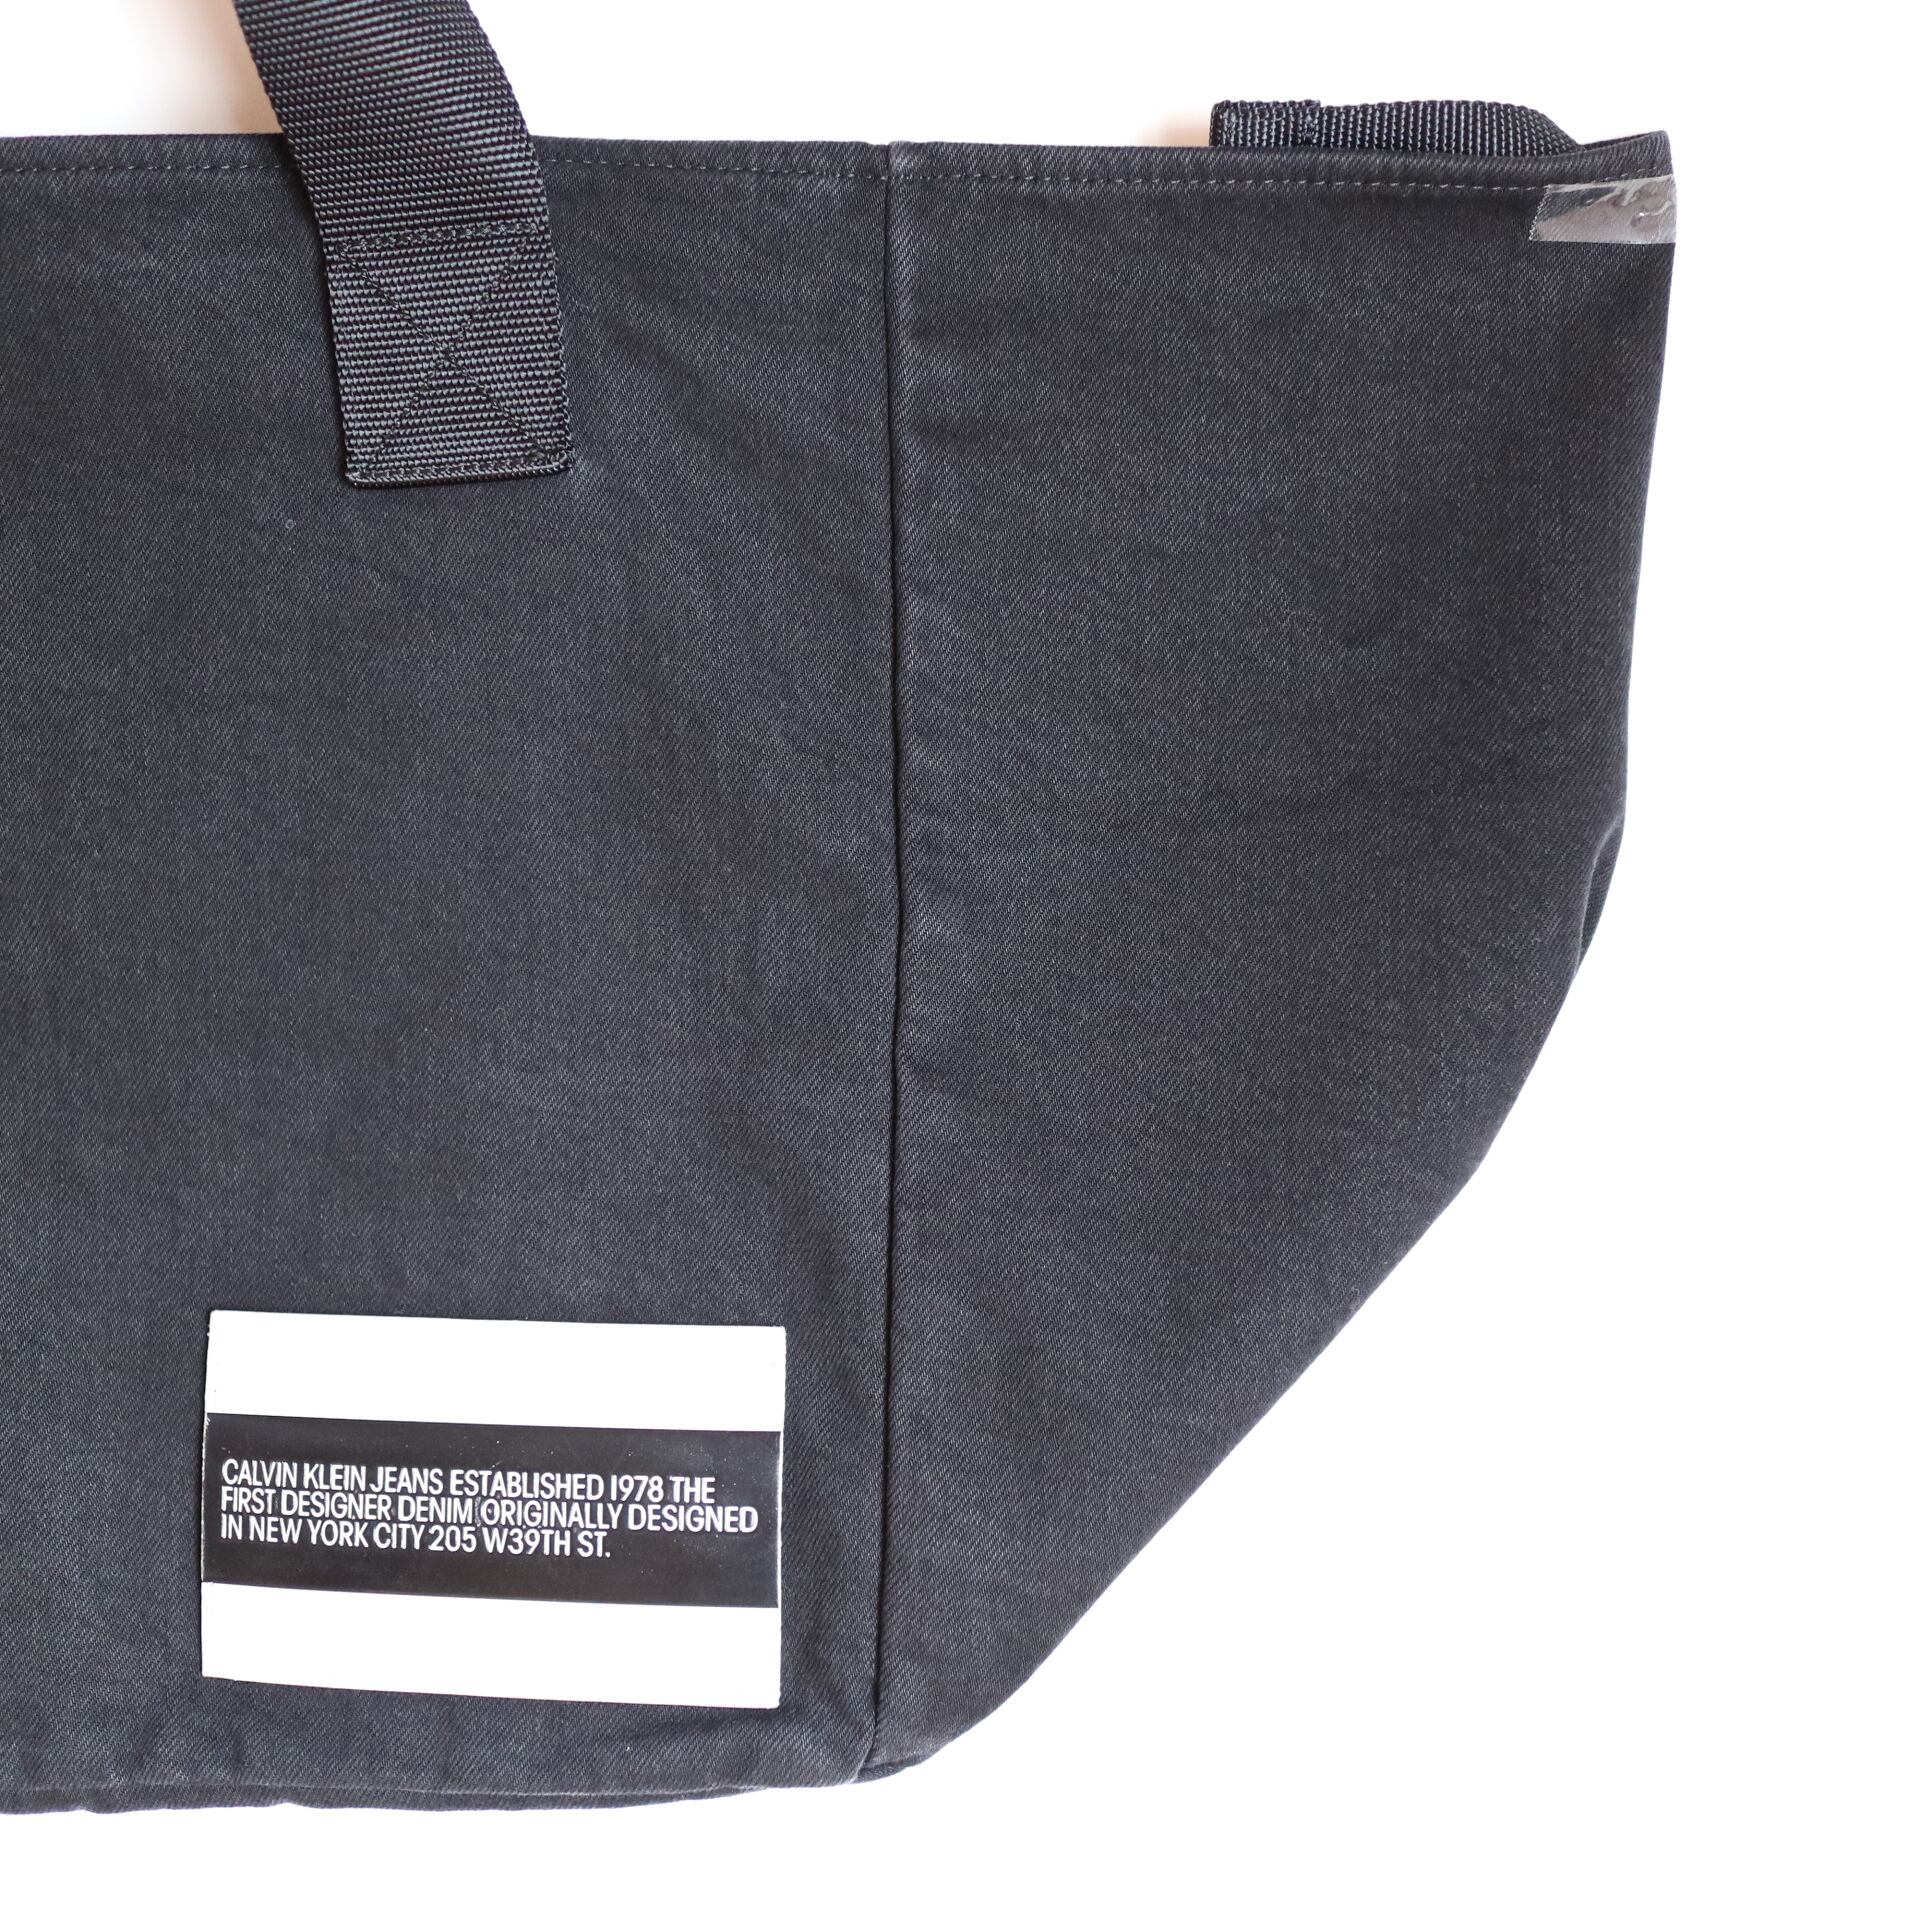 CALVIN KLEIN JEANS / Black Denim Fabric Big Tote Bag / Made in